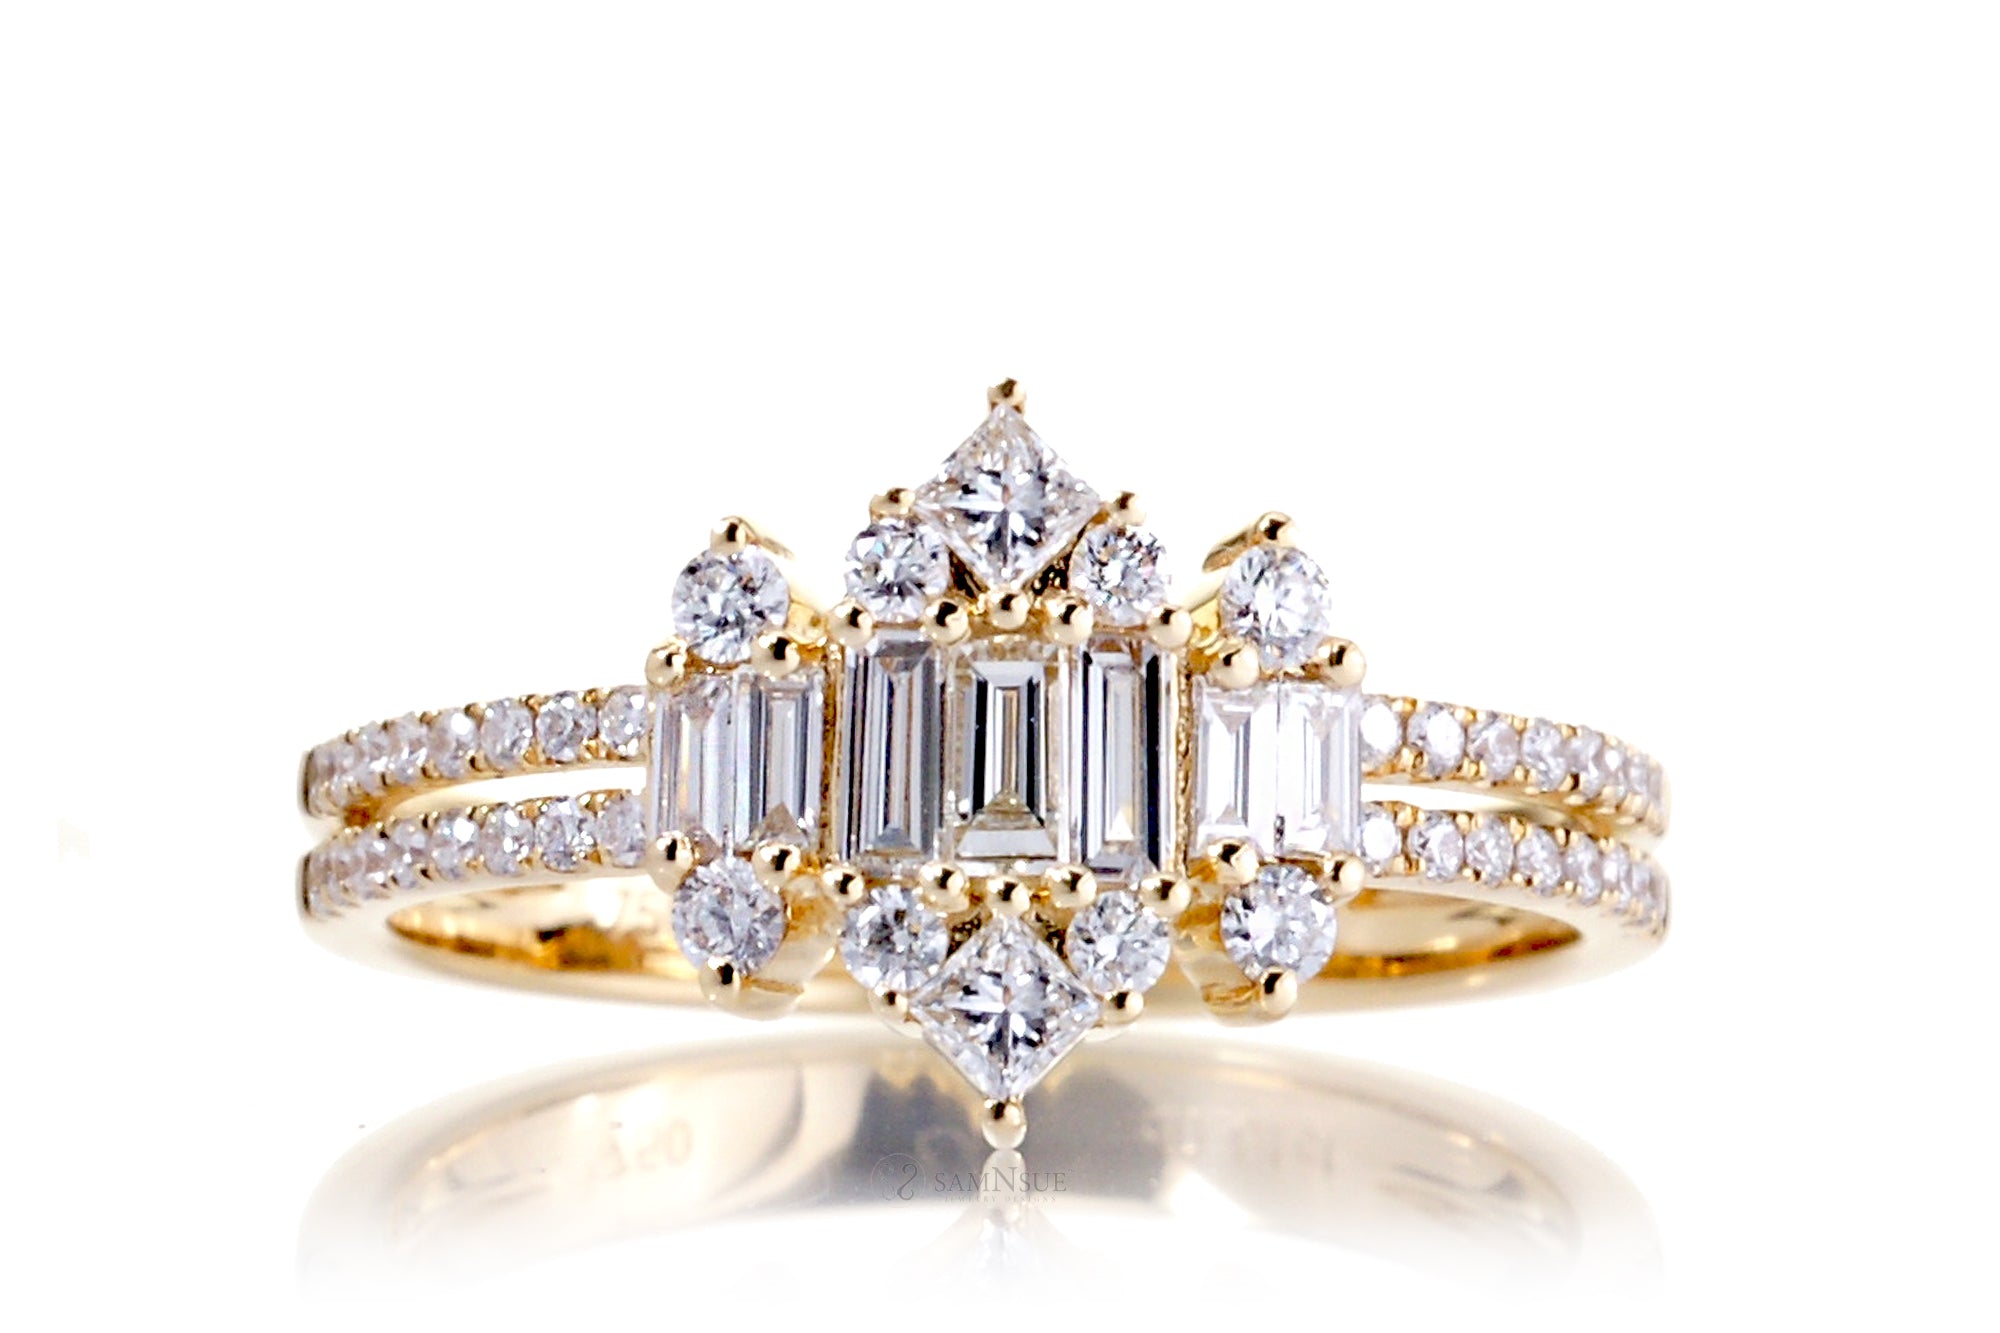 The Taj Mahal Diamond Cluster Ring